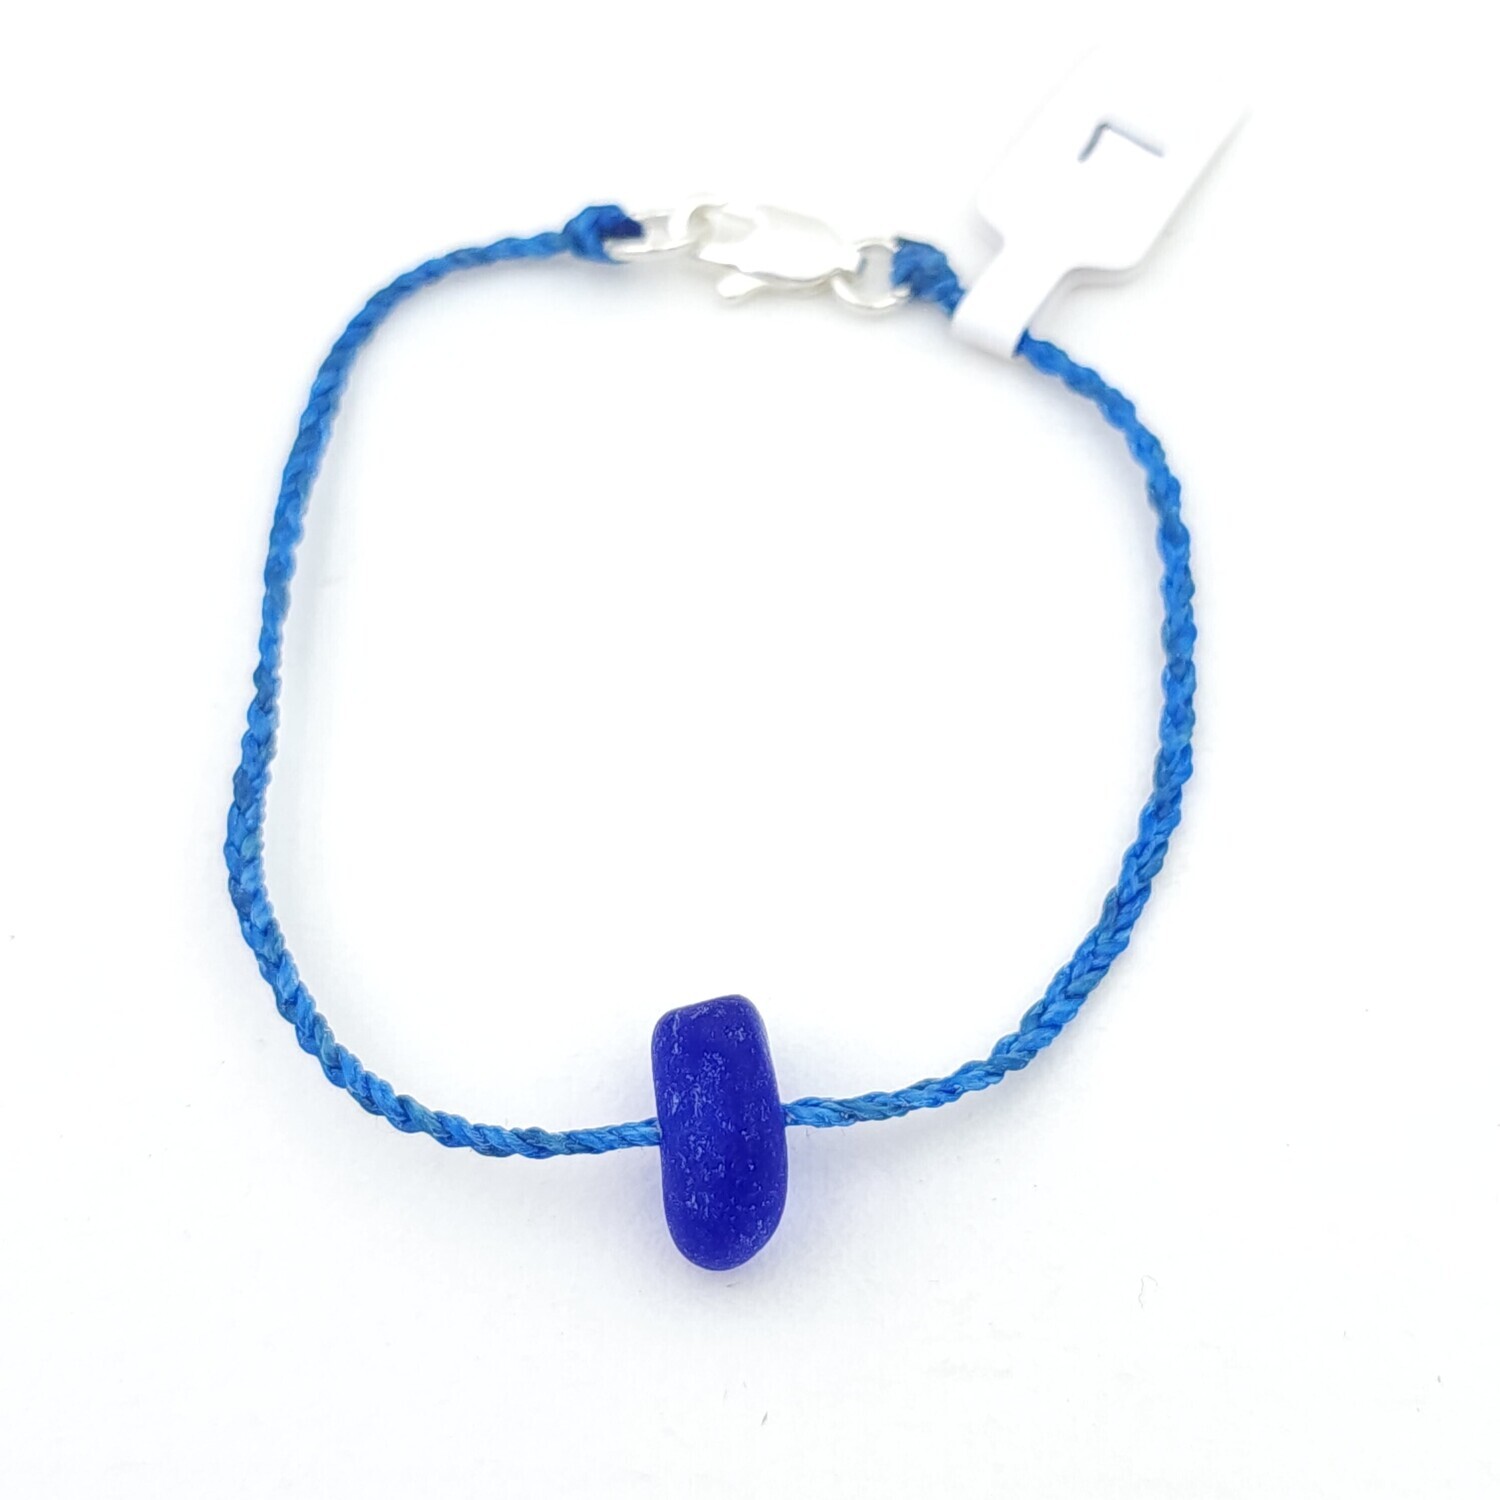 Blue Lake Erie Beach Glass Waxed Cord Bracelet